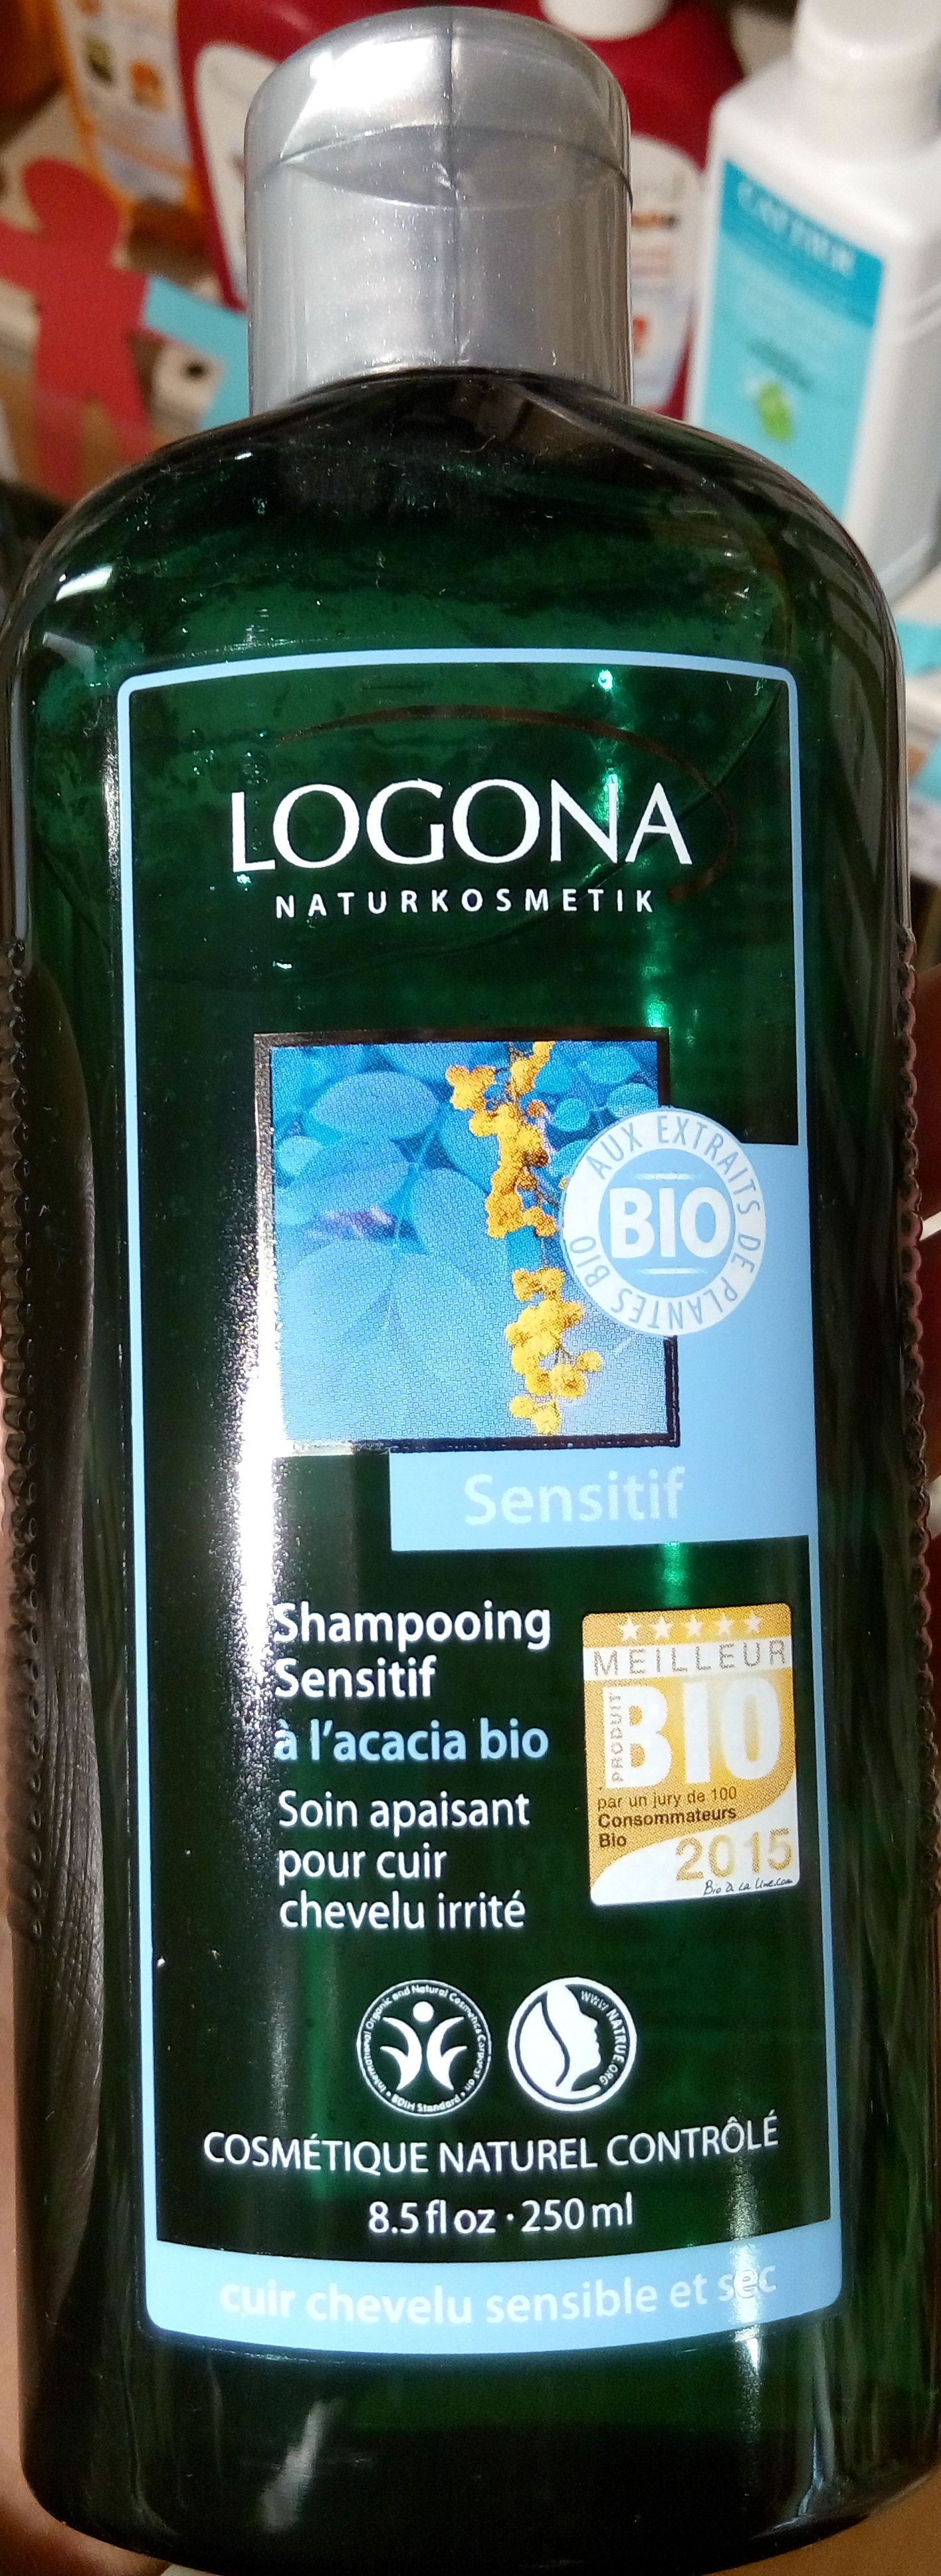 Shampooing sensitif à l'acacia bio - Product - fr